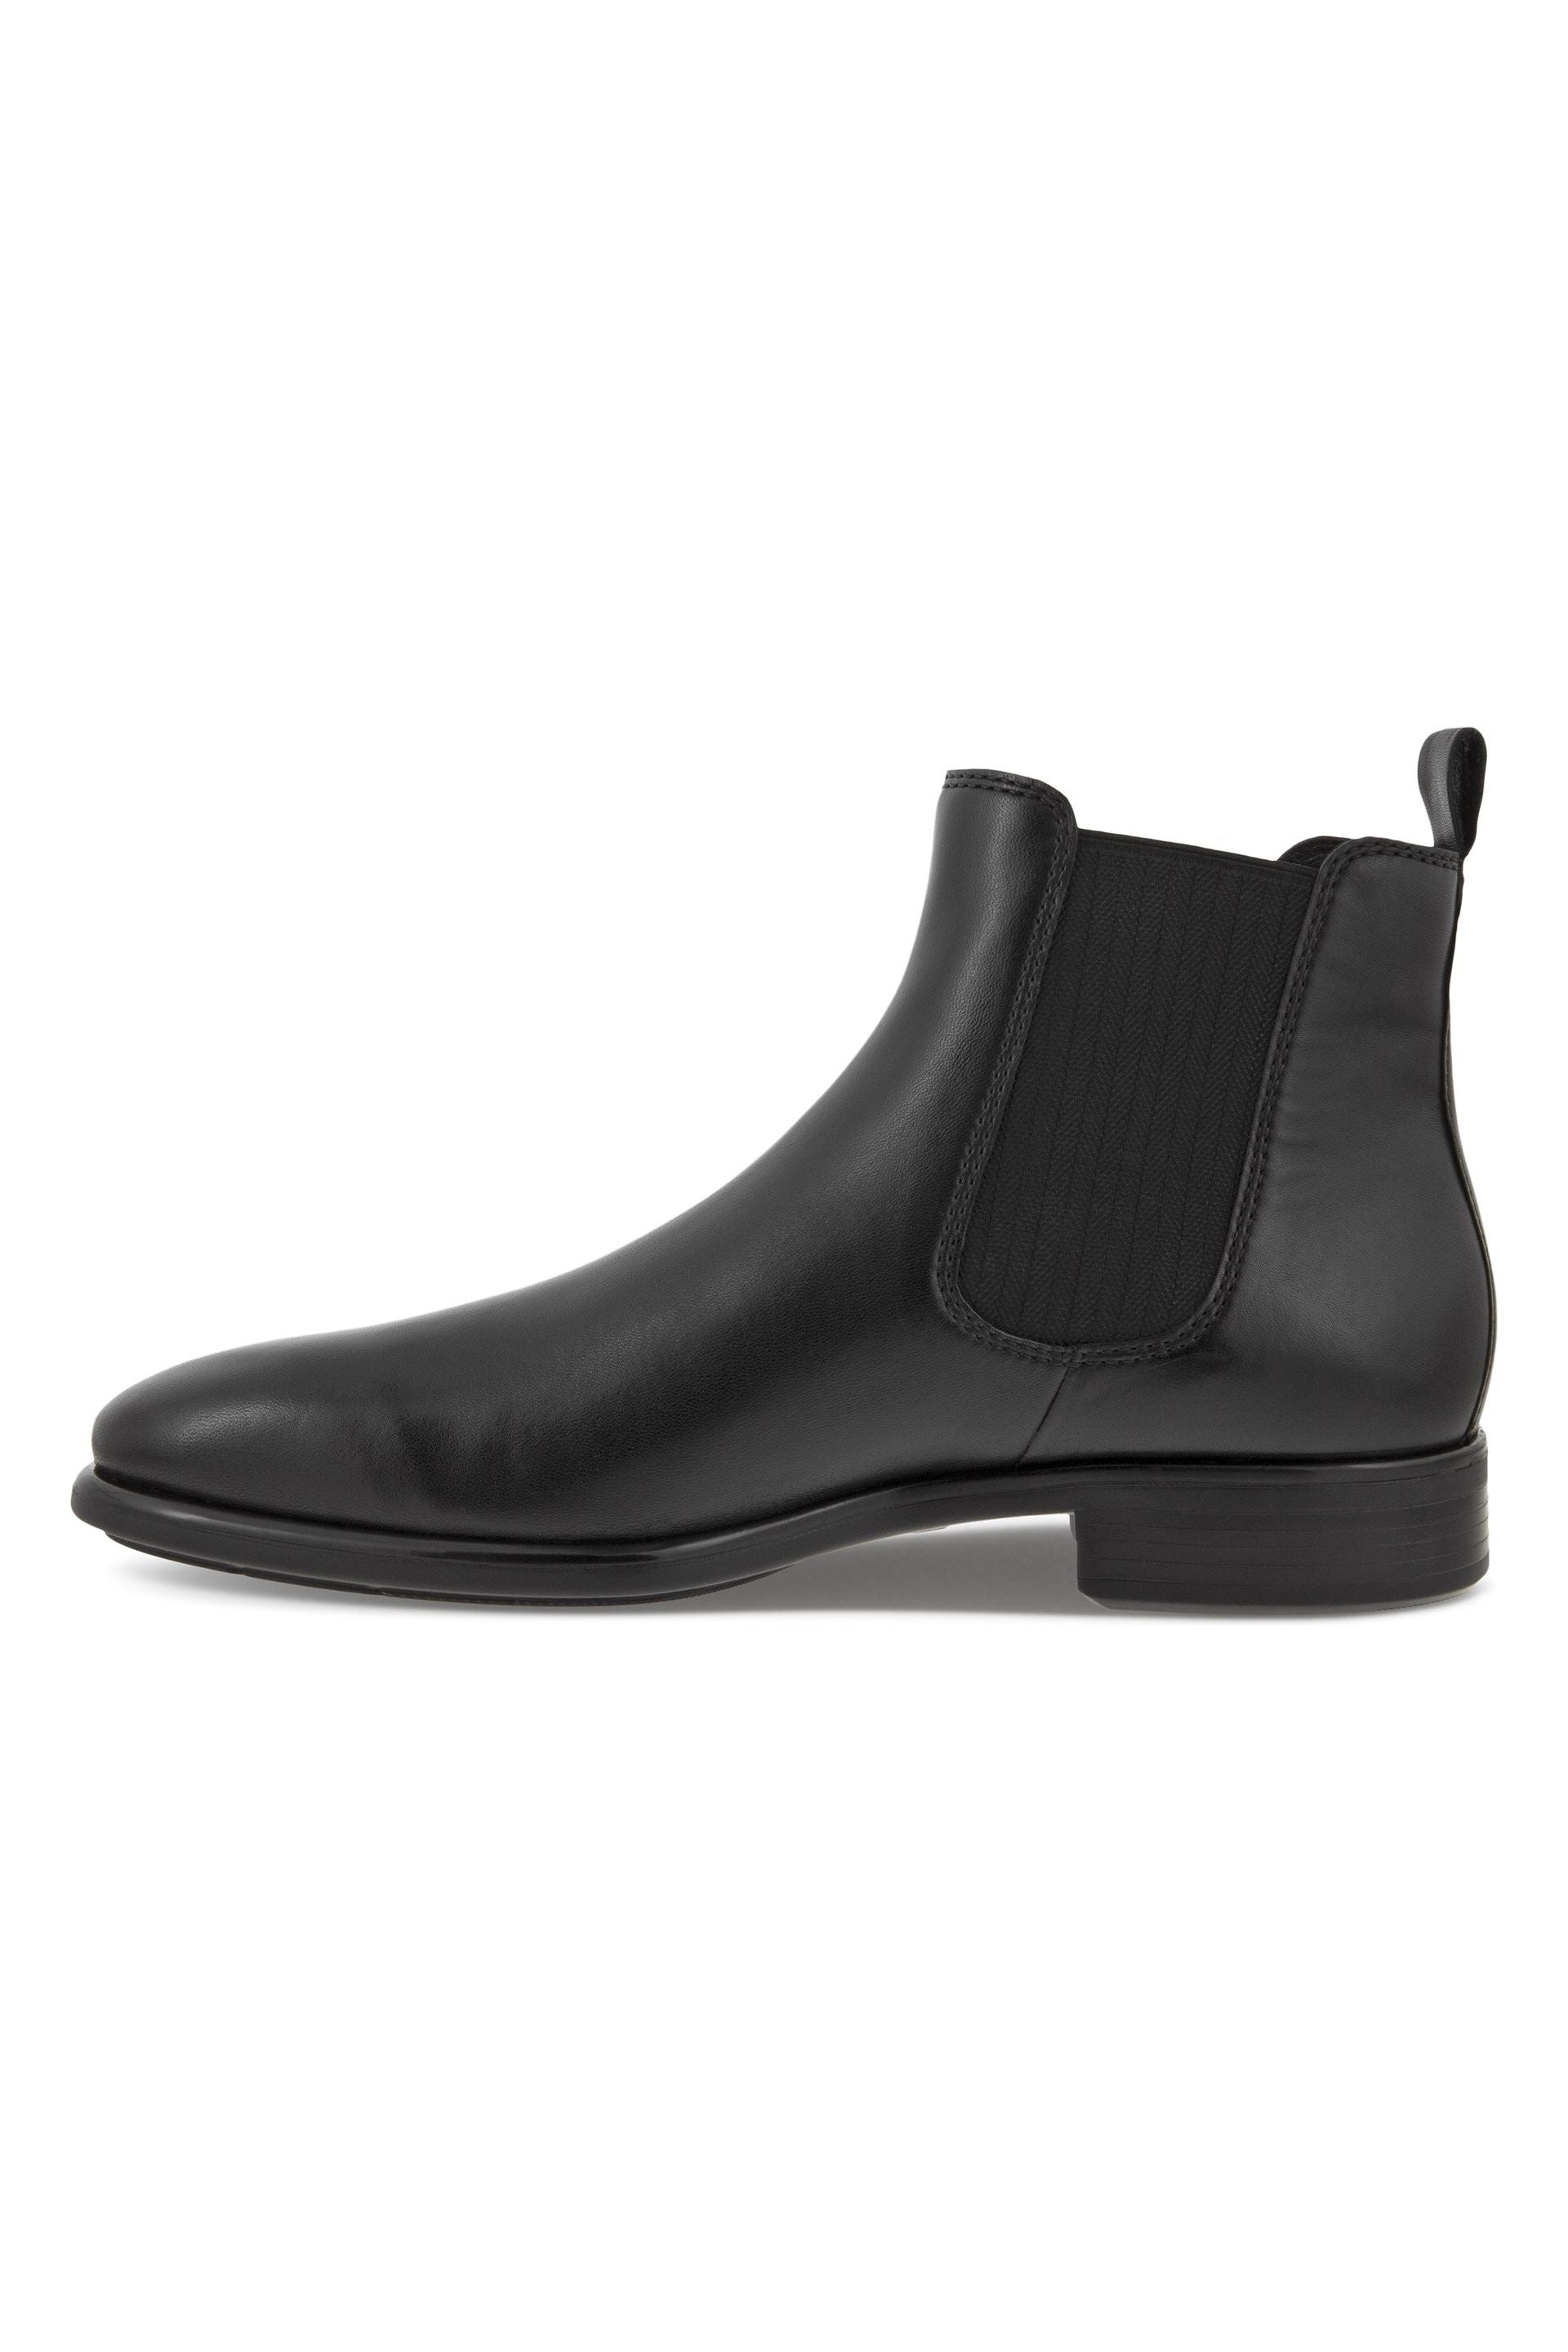 Ecco 512804-01001 Black Leather Boot